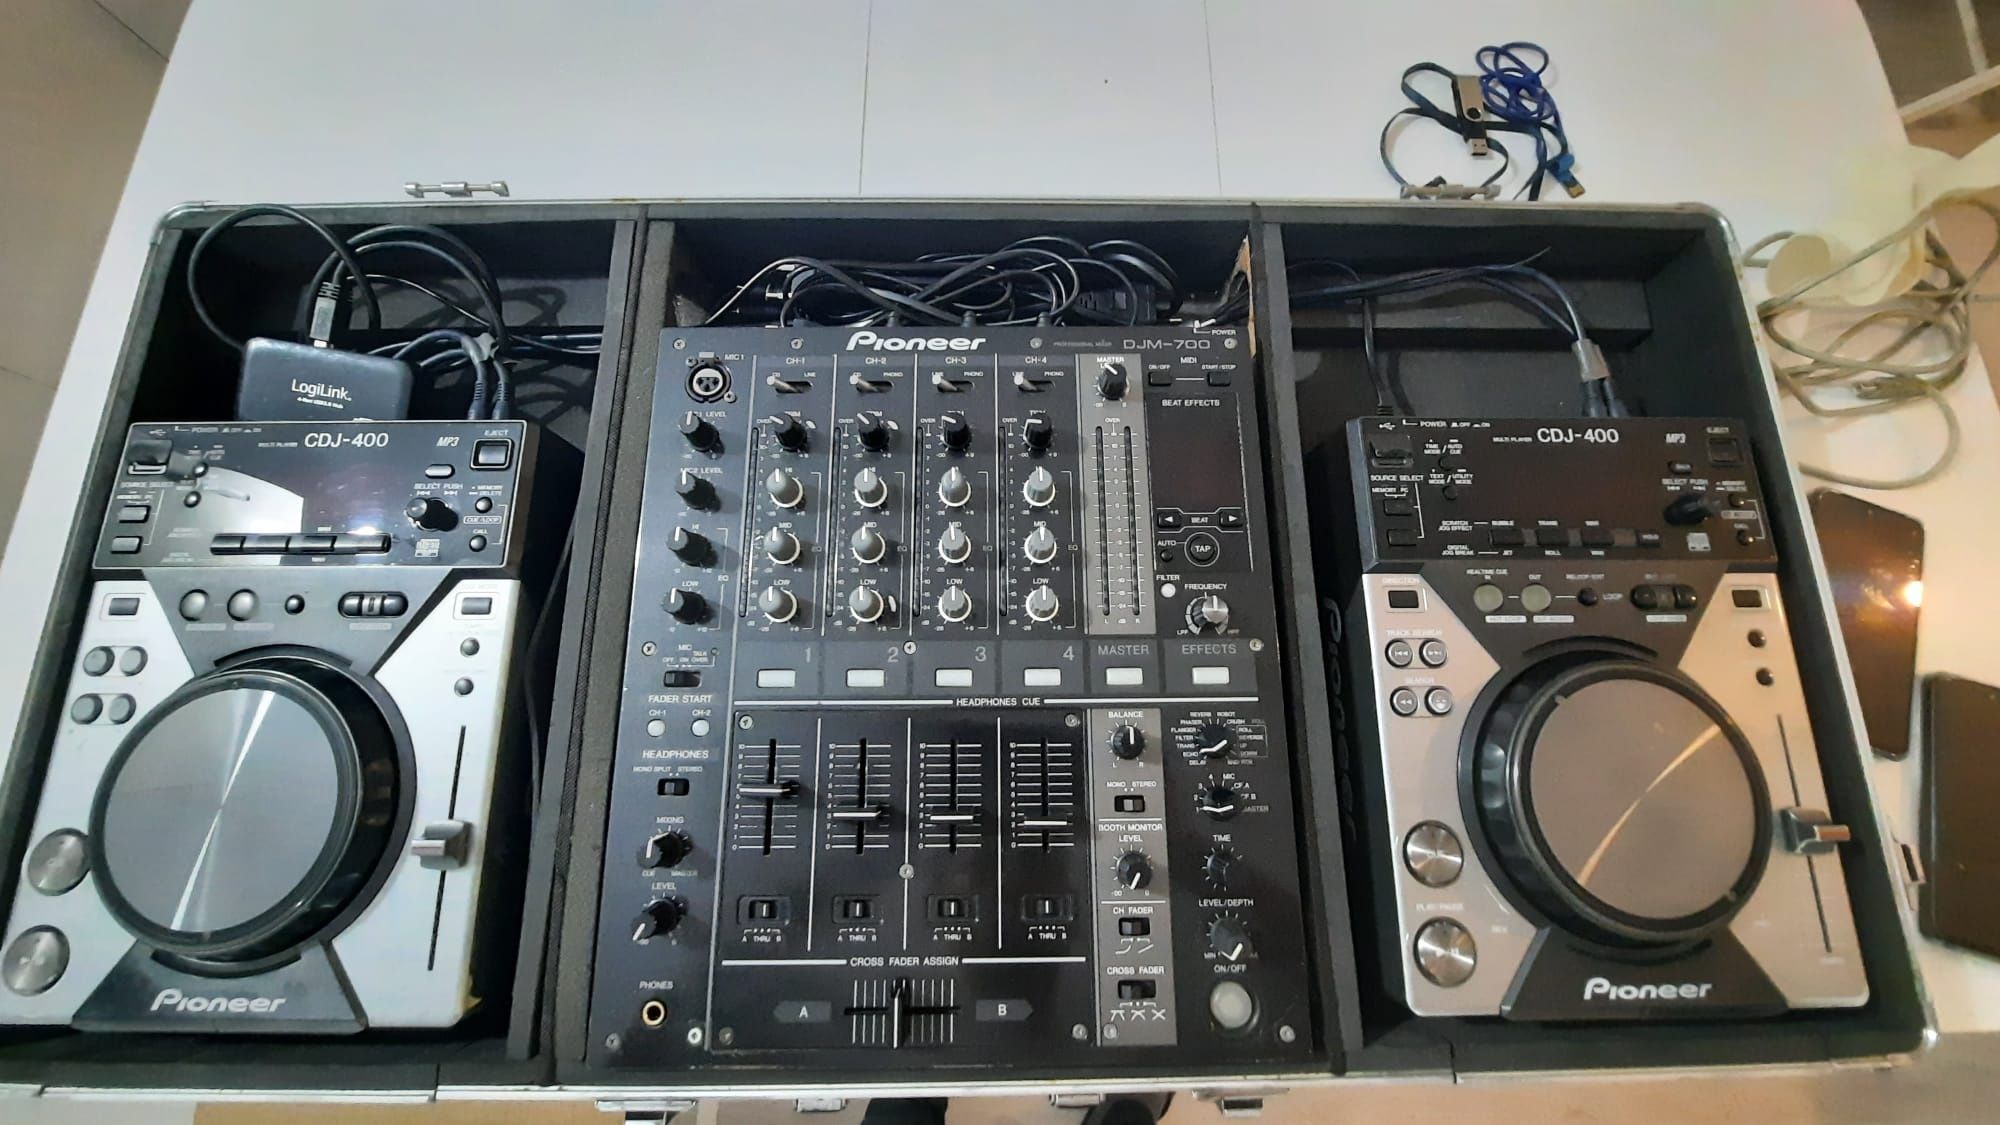 Vând pachet masă dj /mixere și playere Pioneer 400/400/700